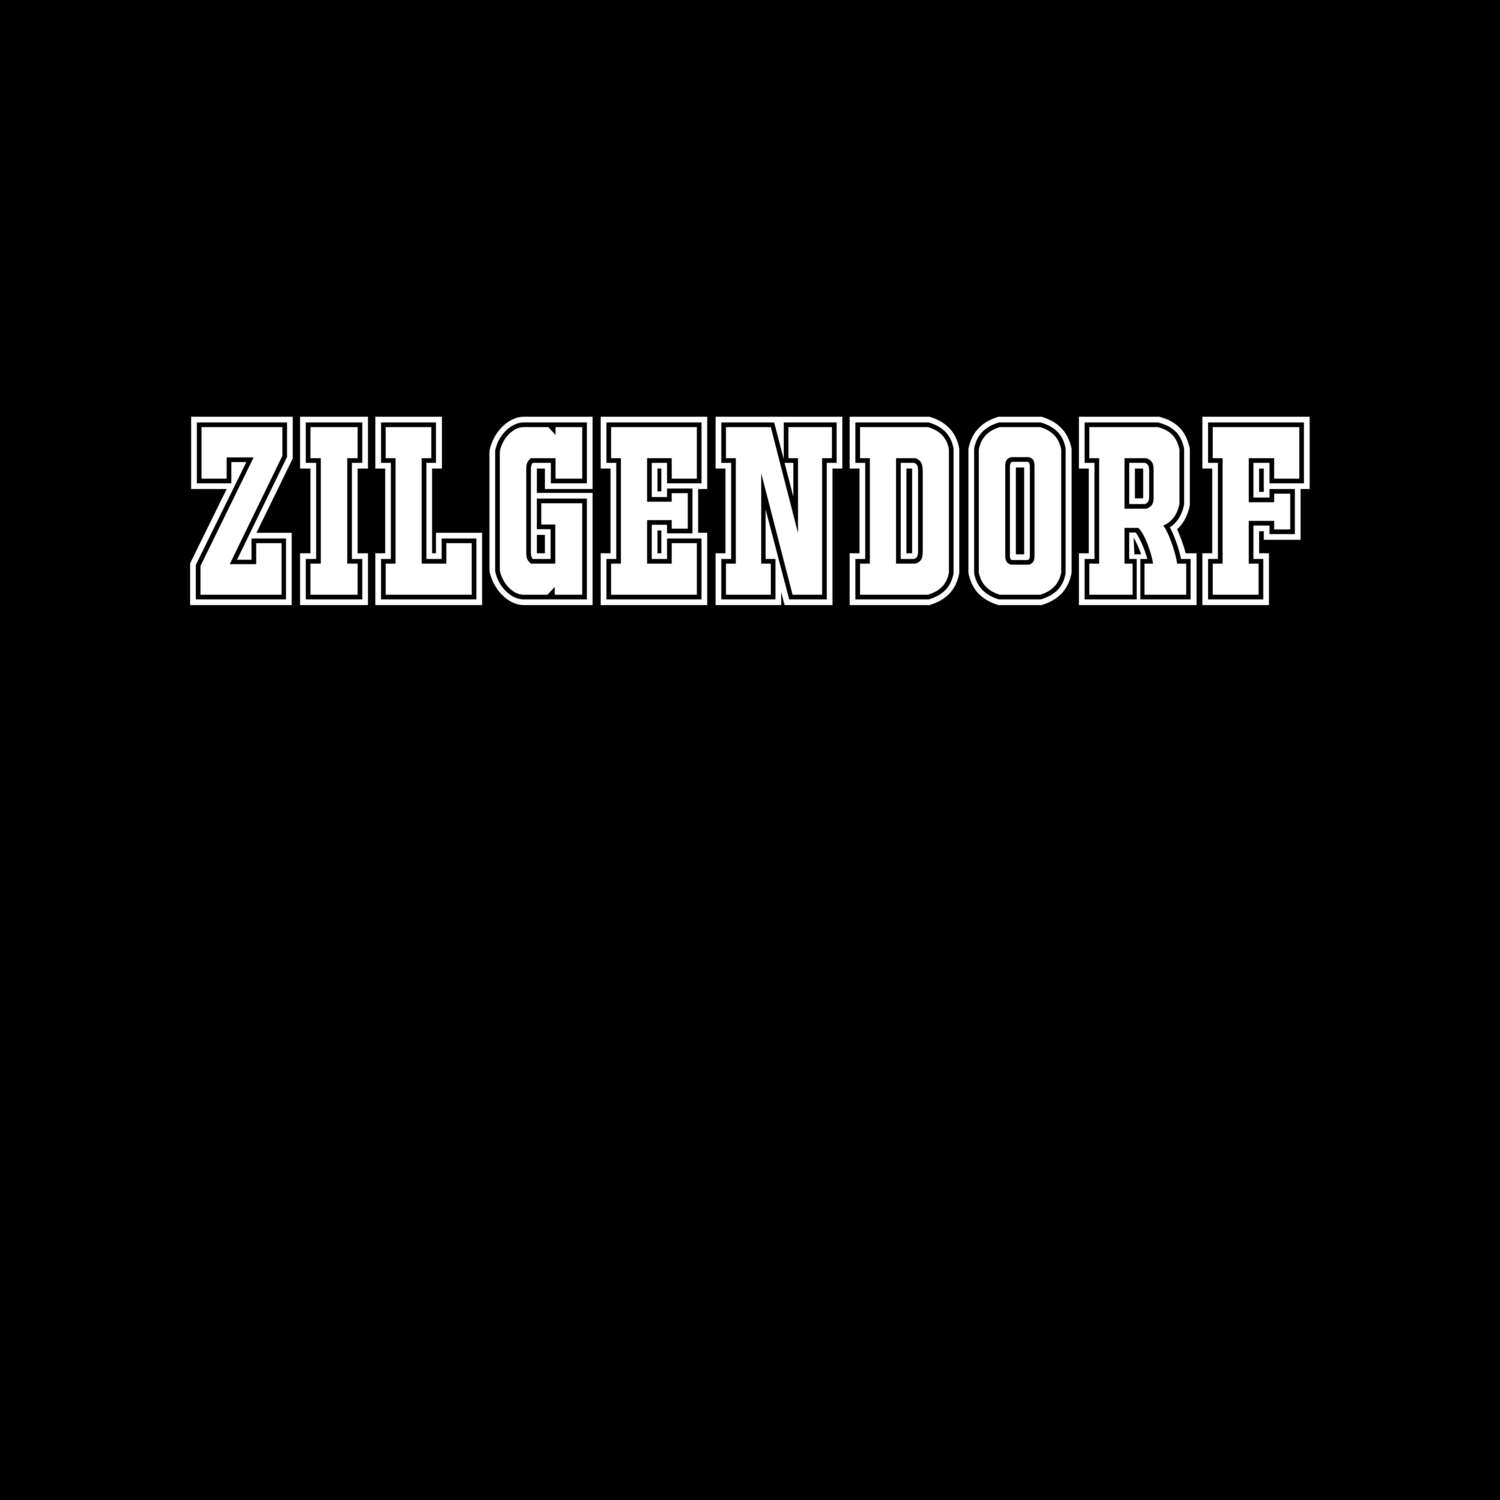 Zilgendorf T-Shirt »Classic«